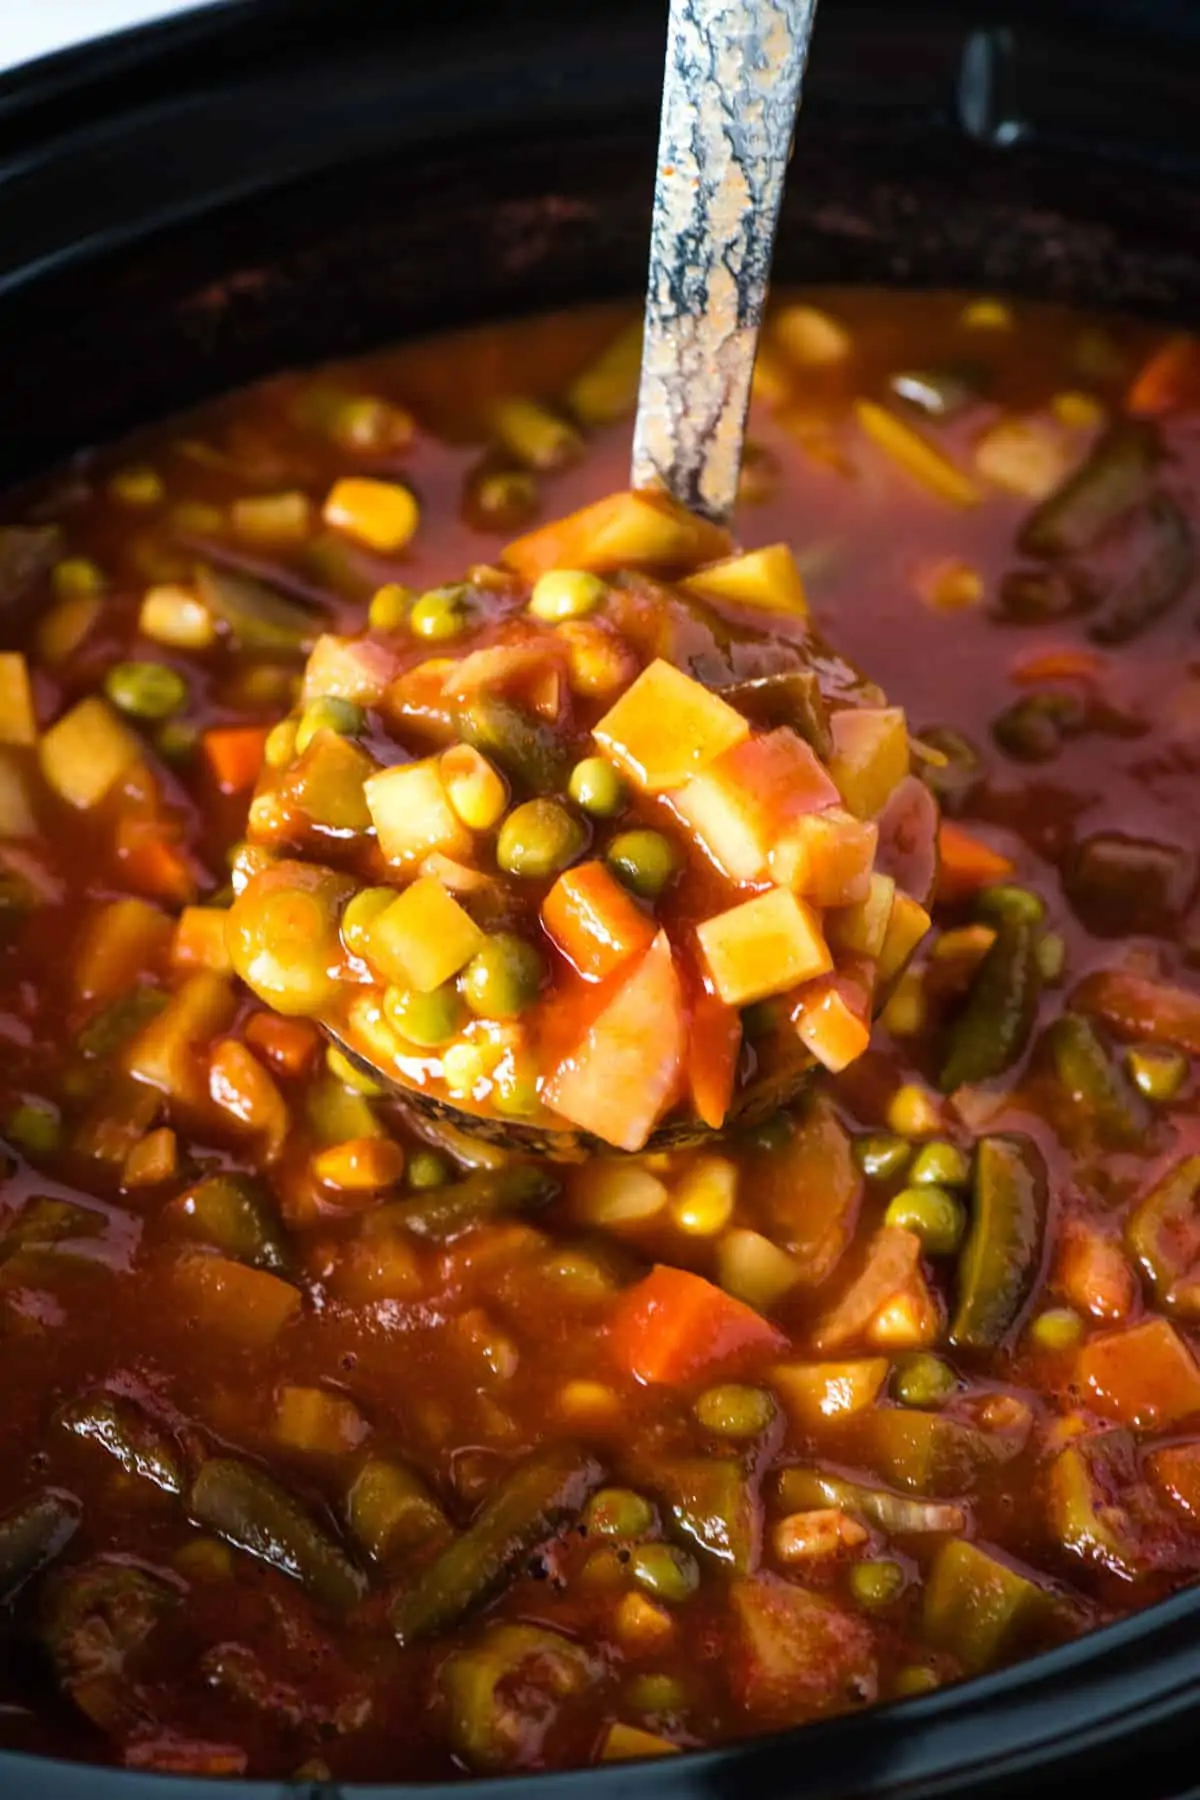 ladle full of CrockPot vegetable soup over black slow cooker full of soup